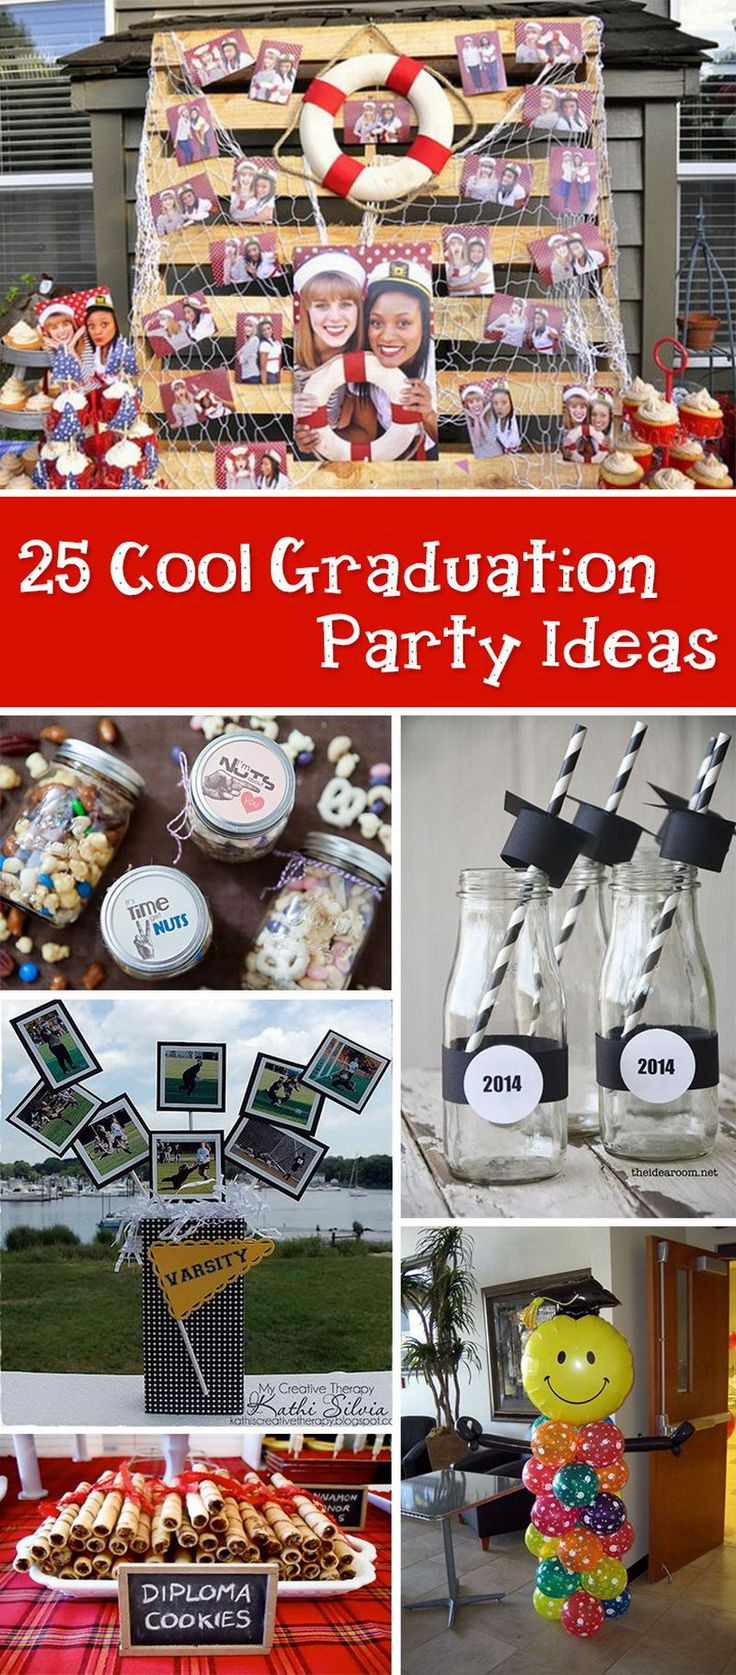 After Graduation Party Ideas
 1000 images about Graduation Party on Pinterest